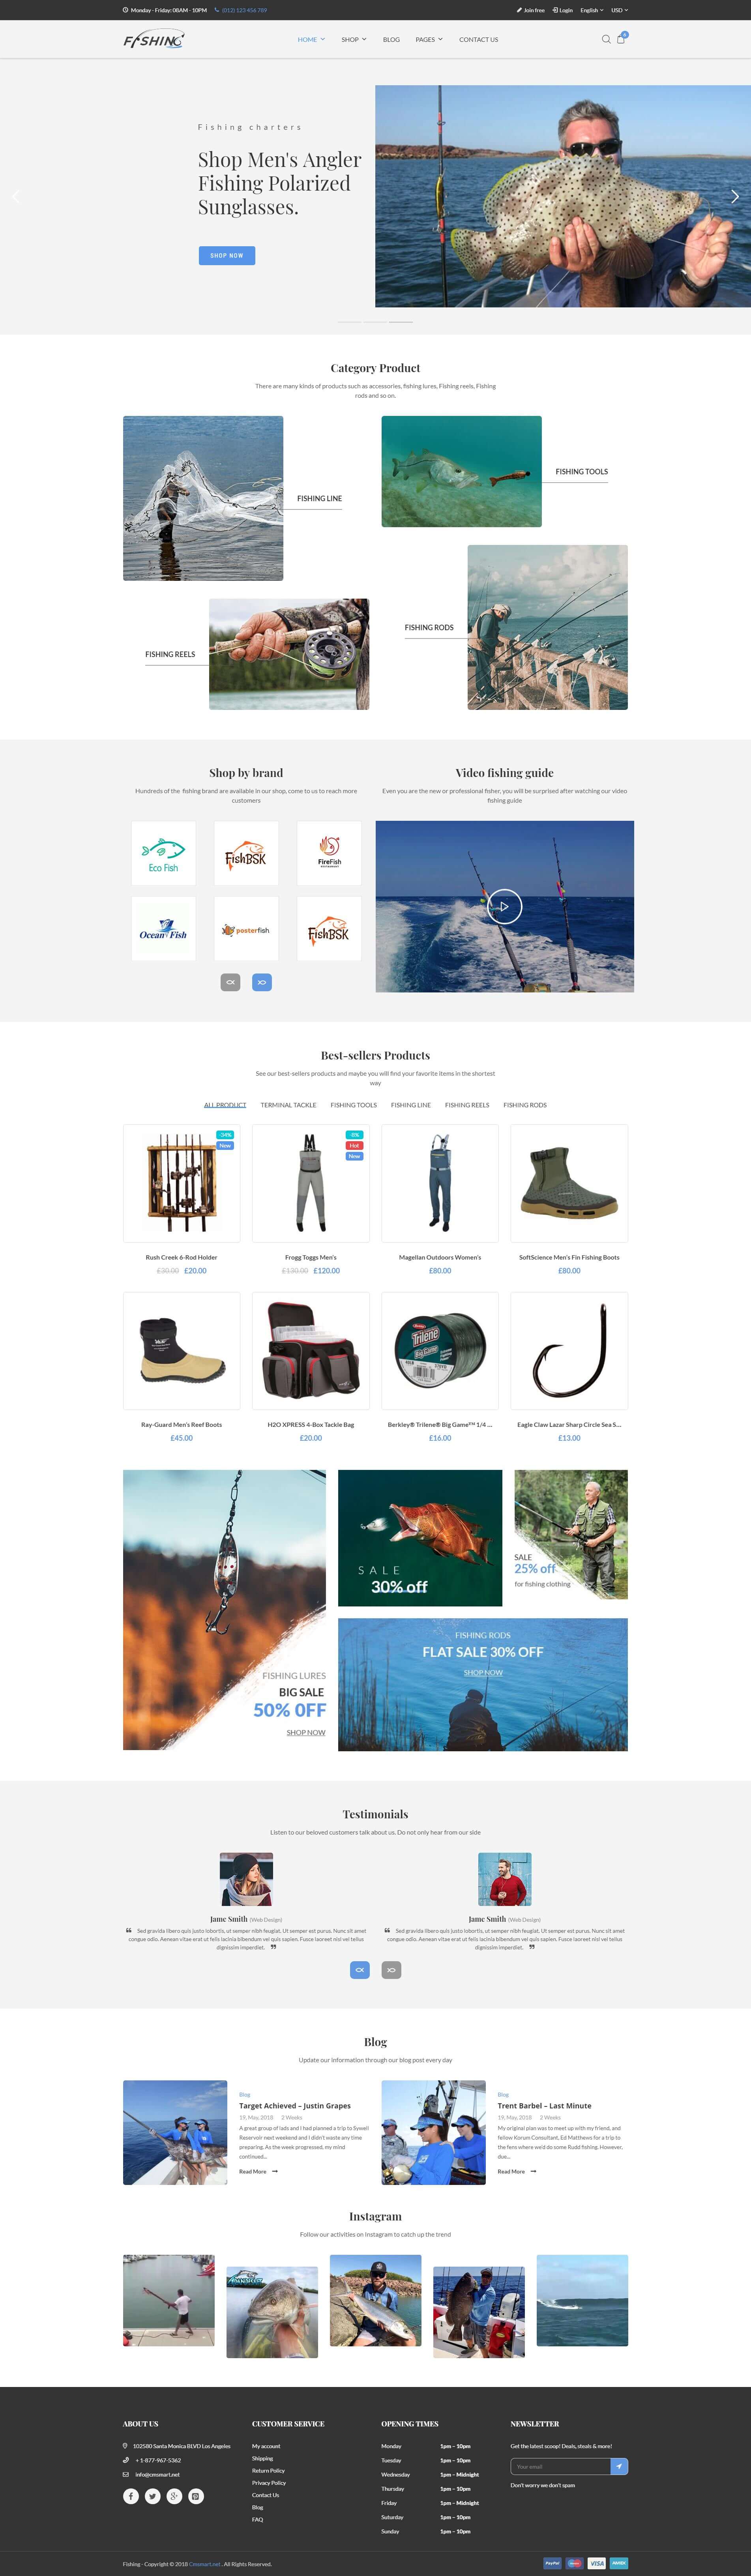 Fishing Store For WordPress Theme by netbaseteam